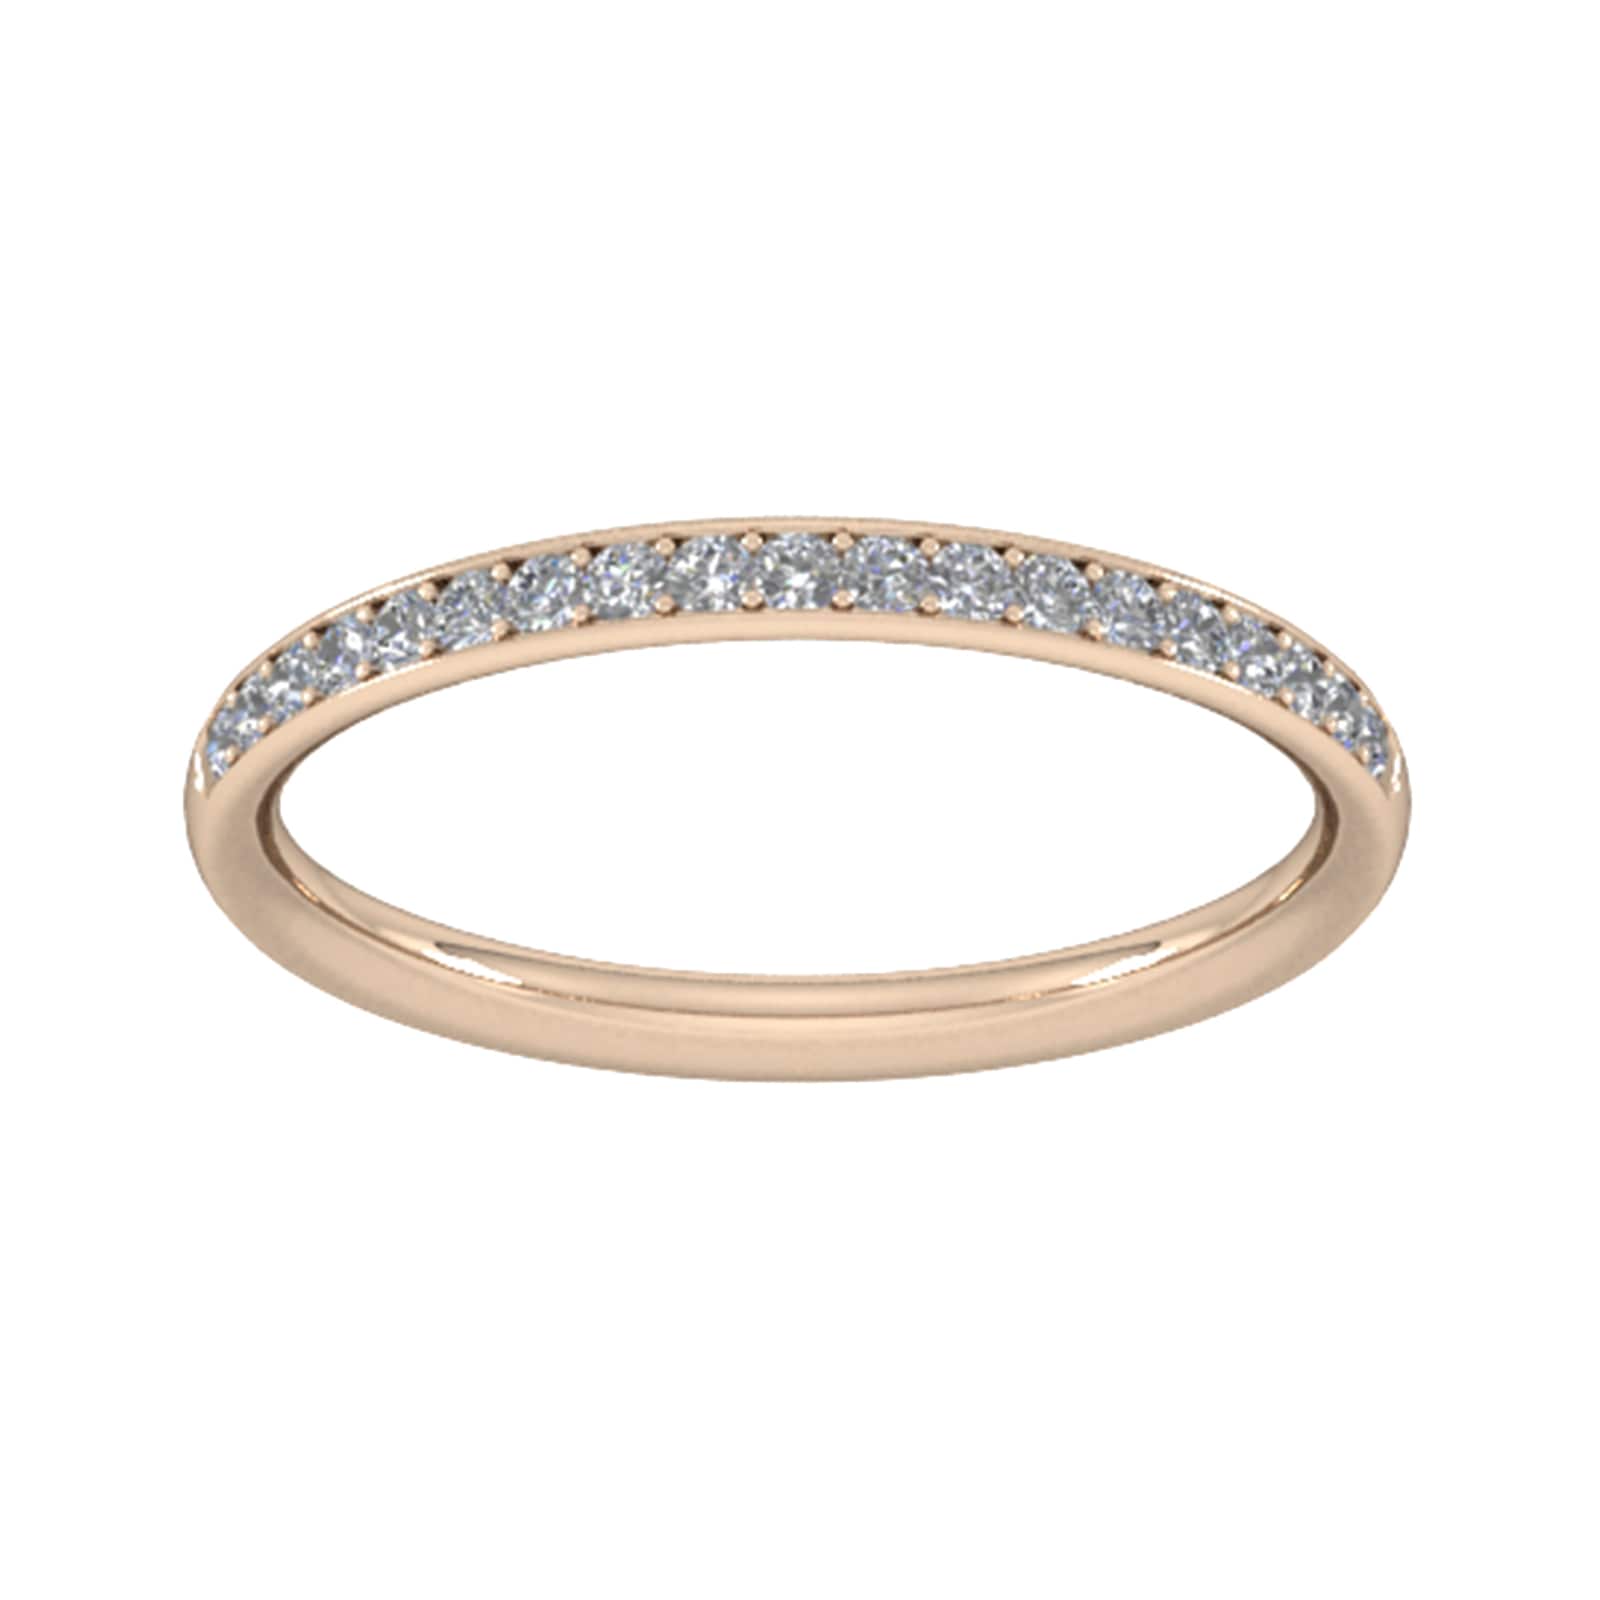 0.18 Carat Total Weight Brilliant Cut Grain Set Diamond Wedding Ring In 18 Carat Rose Gold - Ring Size R